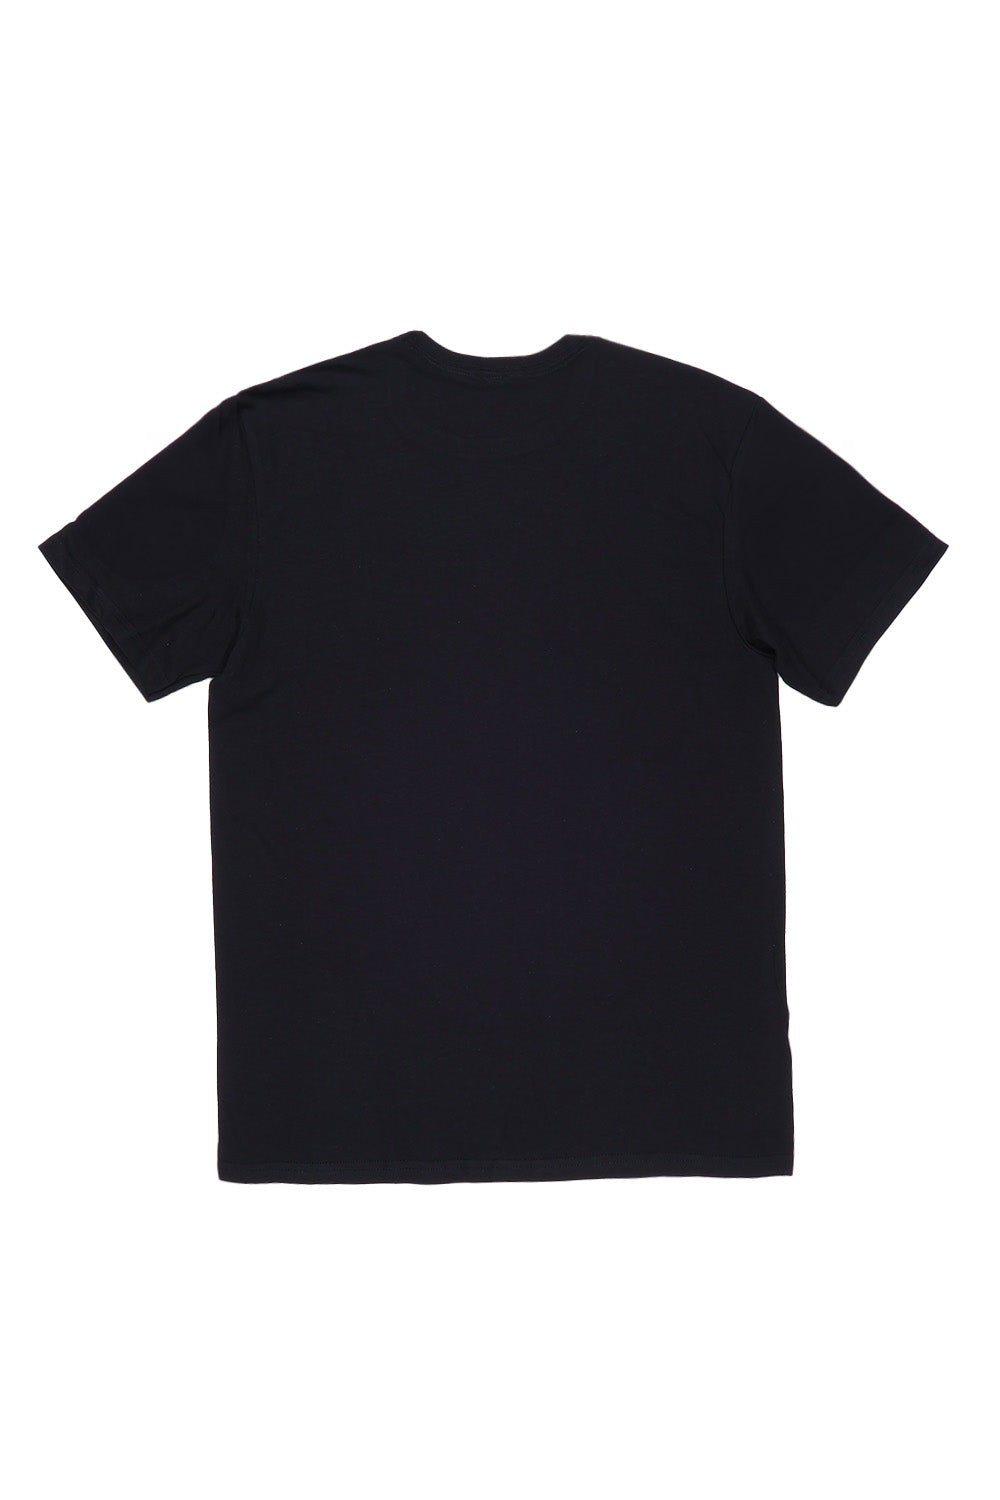 Las Vegas T-Shirt in Black (Custom Packs)